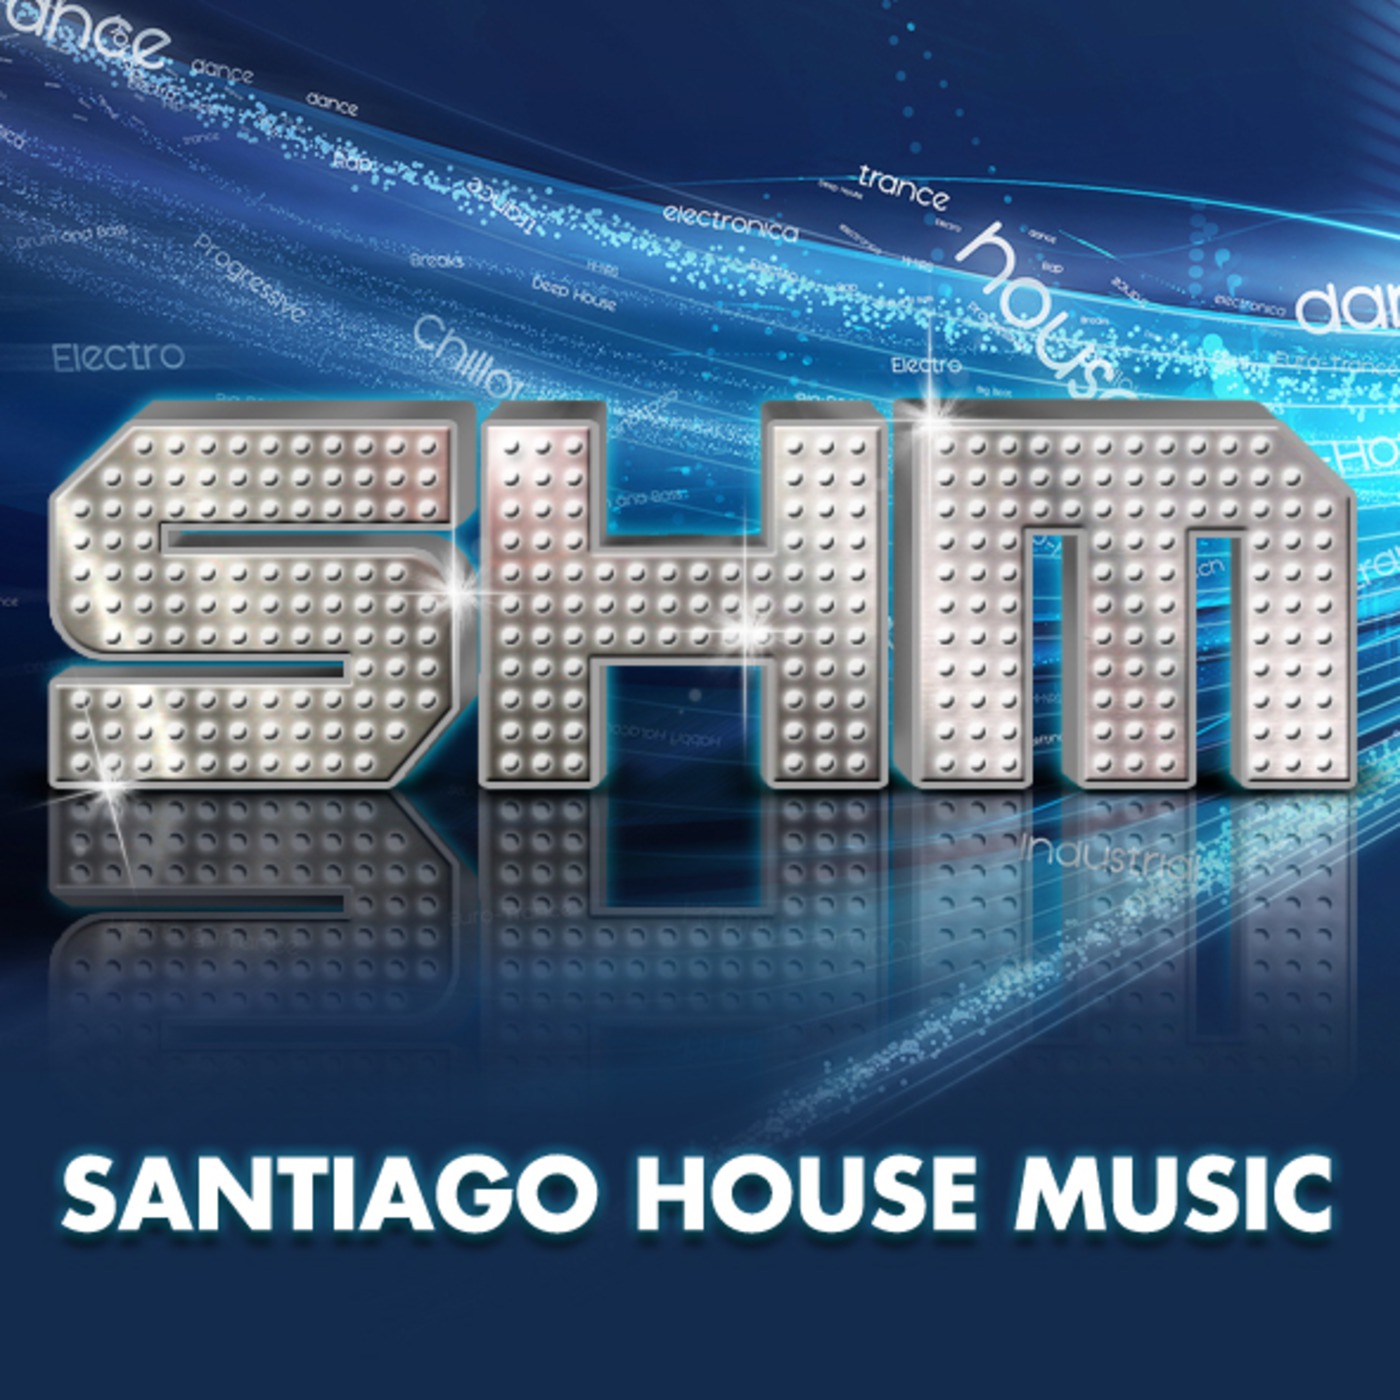 SANTIAGO HOUSE MUSIC